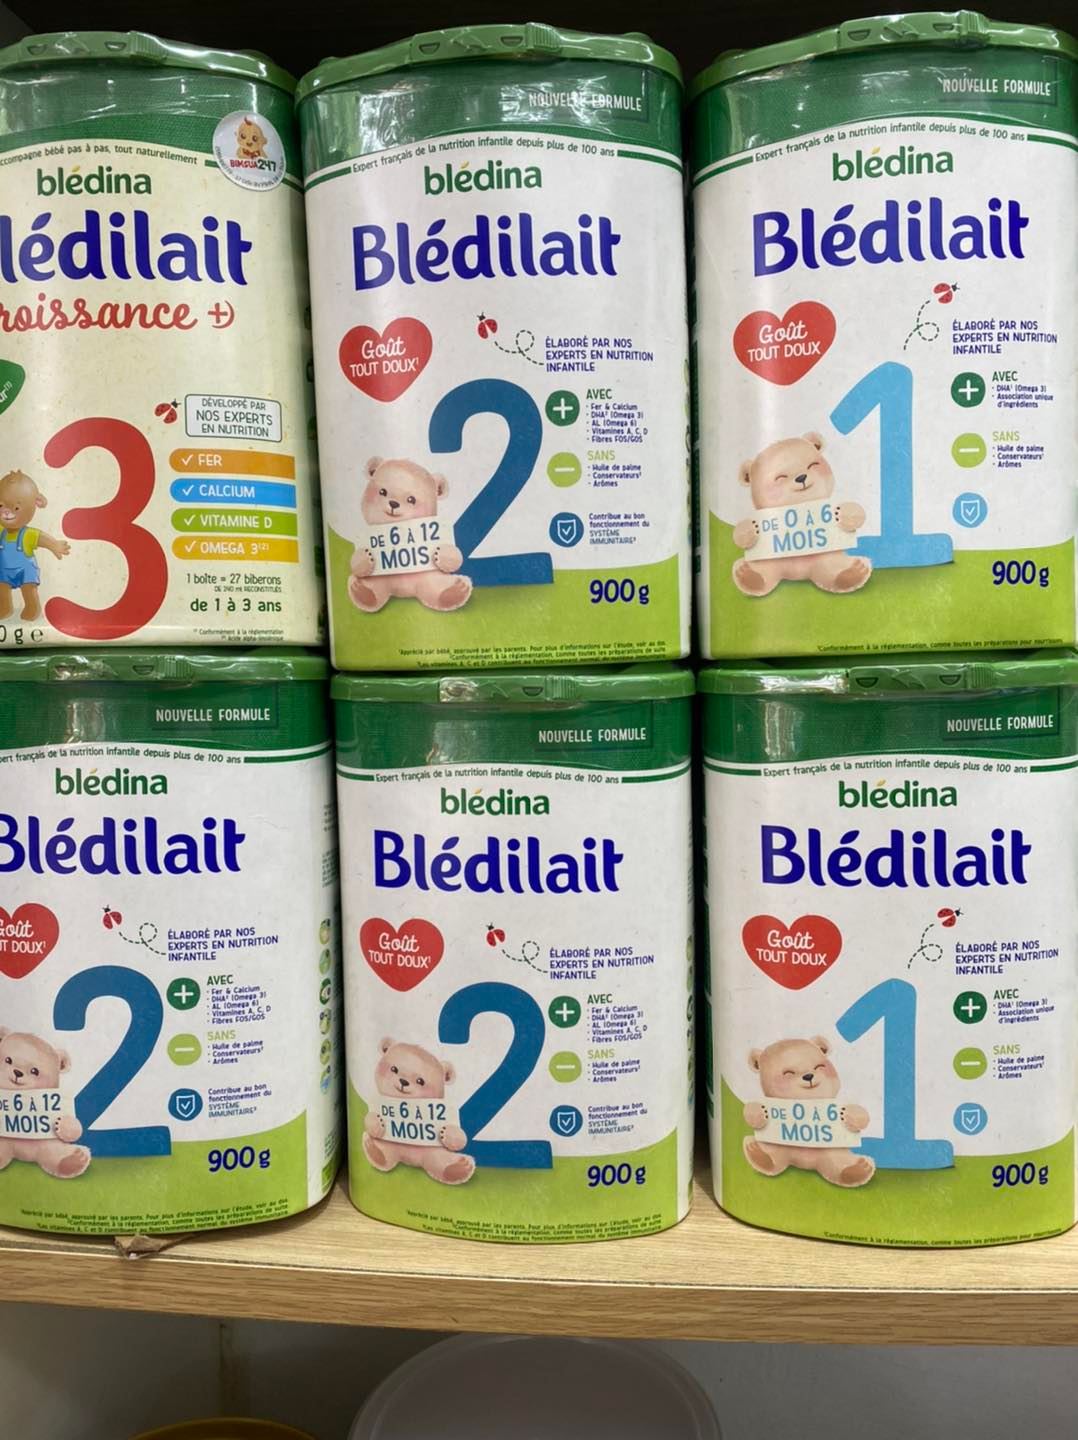 Sữa Bledilait  số 2 của Pháp hộp 900g